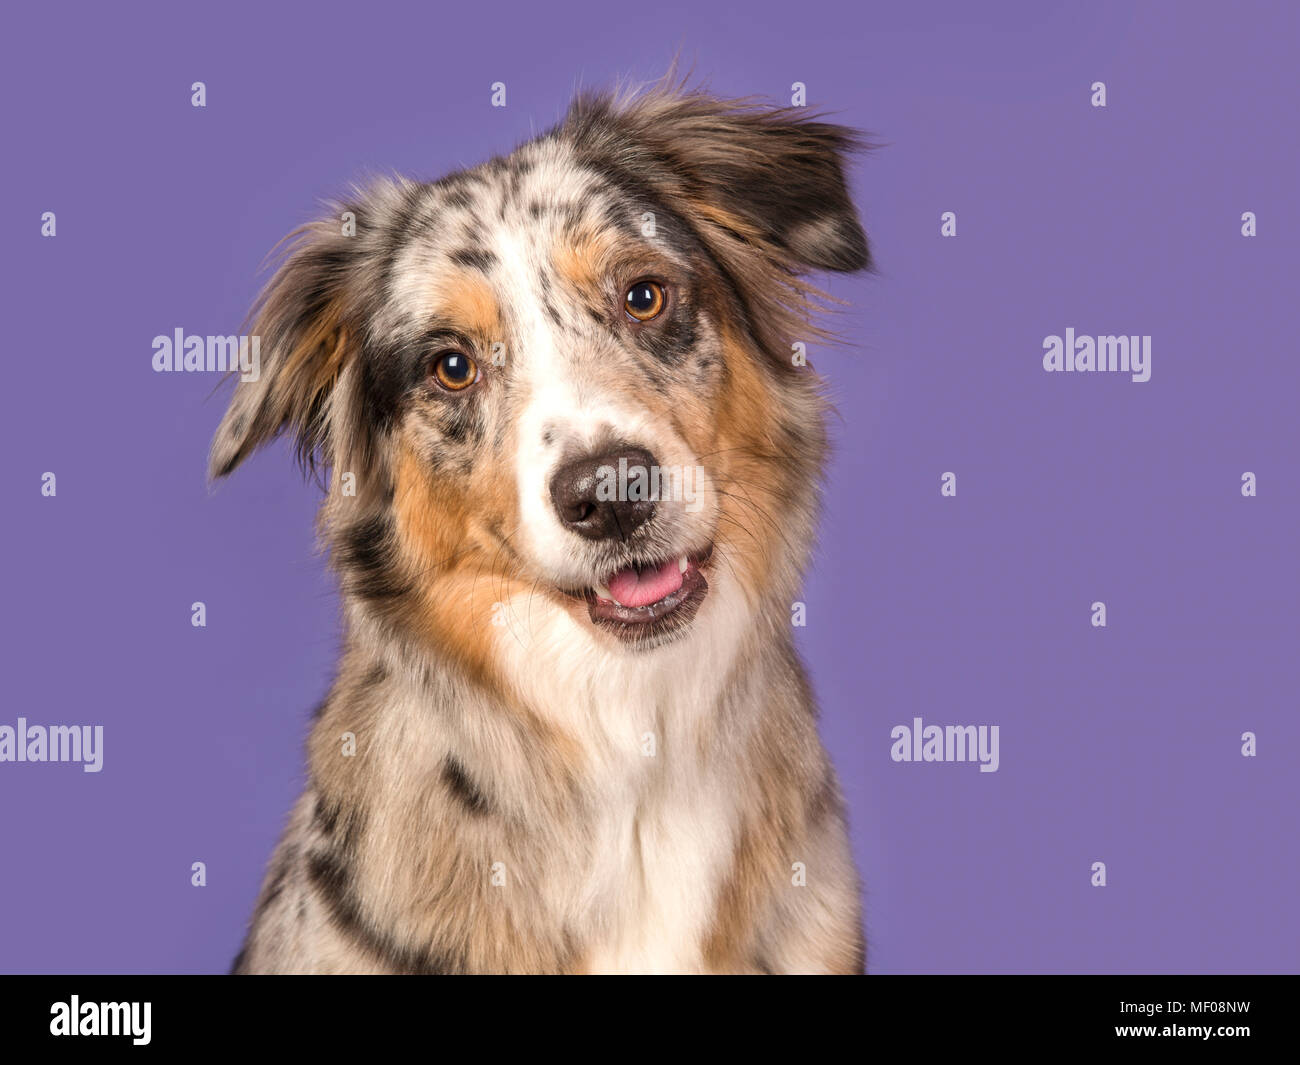 Portrait of a pretty australian shepherd dog on a purple background in a horizontal image Stock Photo